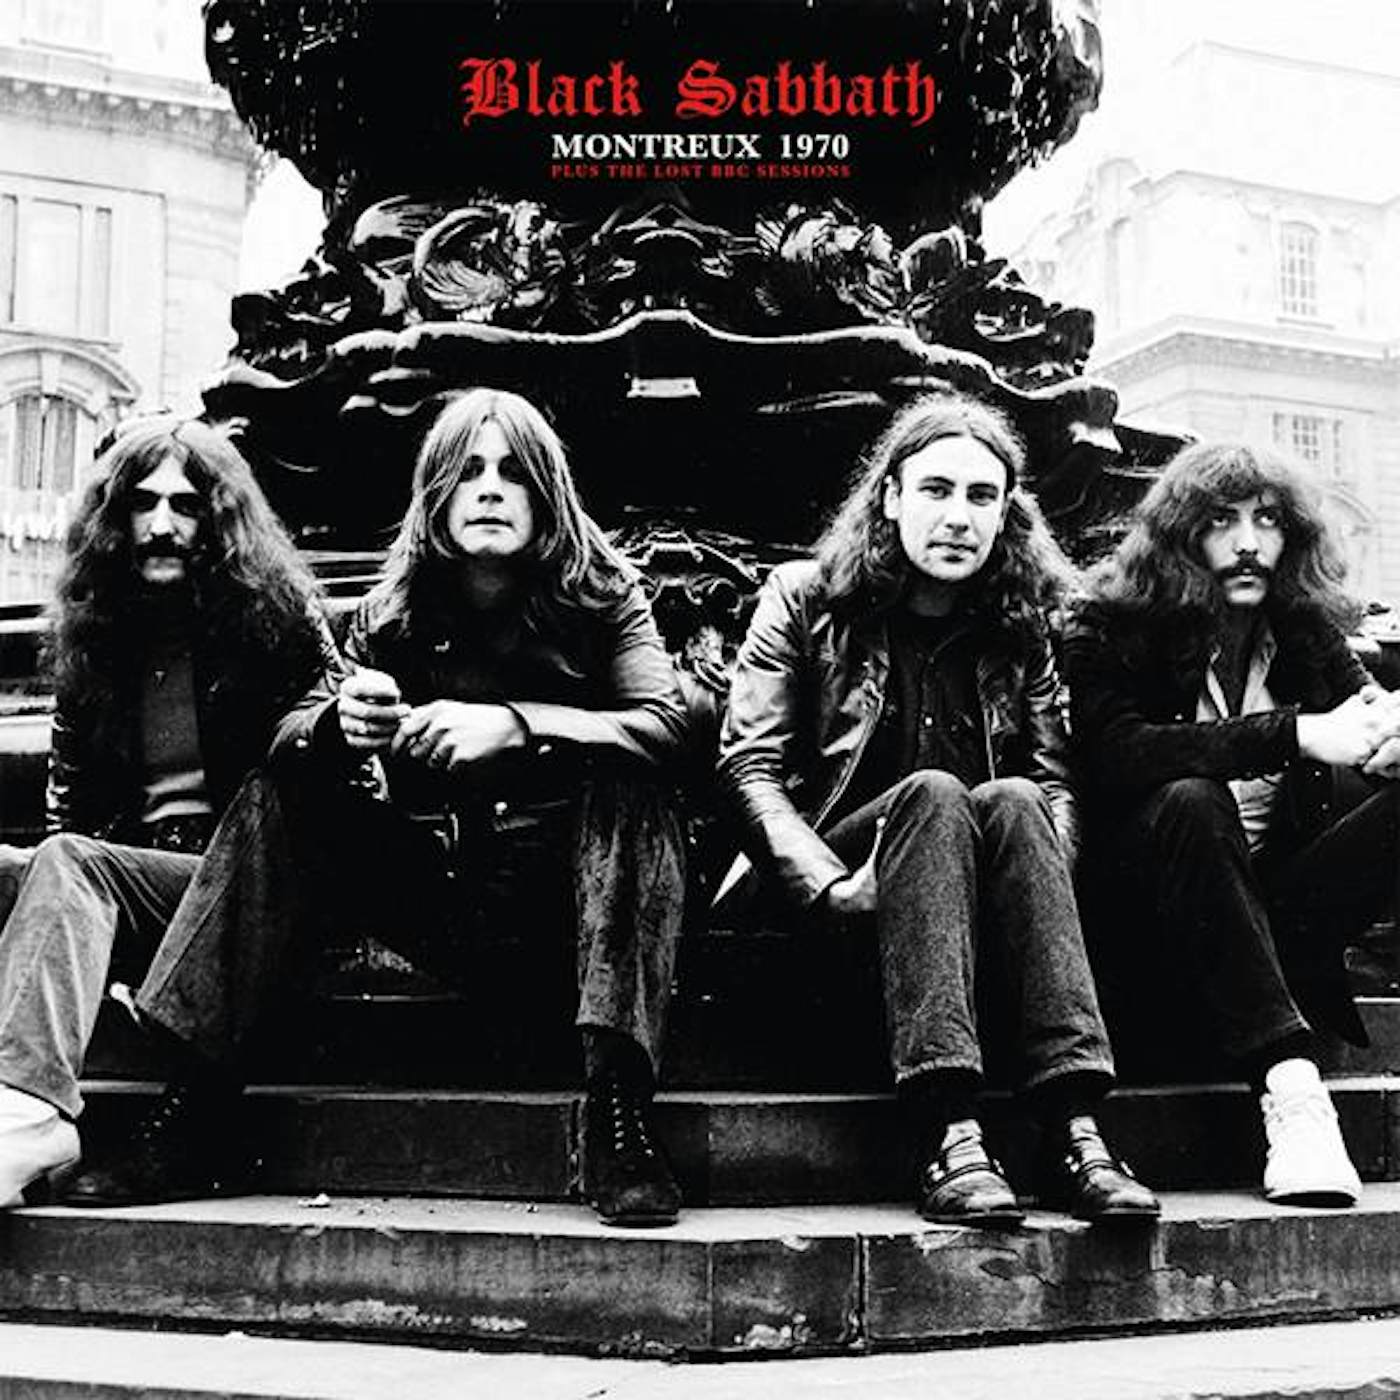 Black Sabbath MONTREUX 1970 Vinyl Record